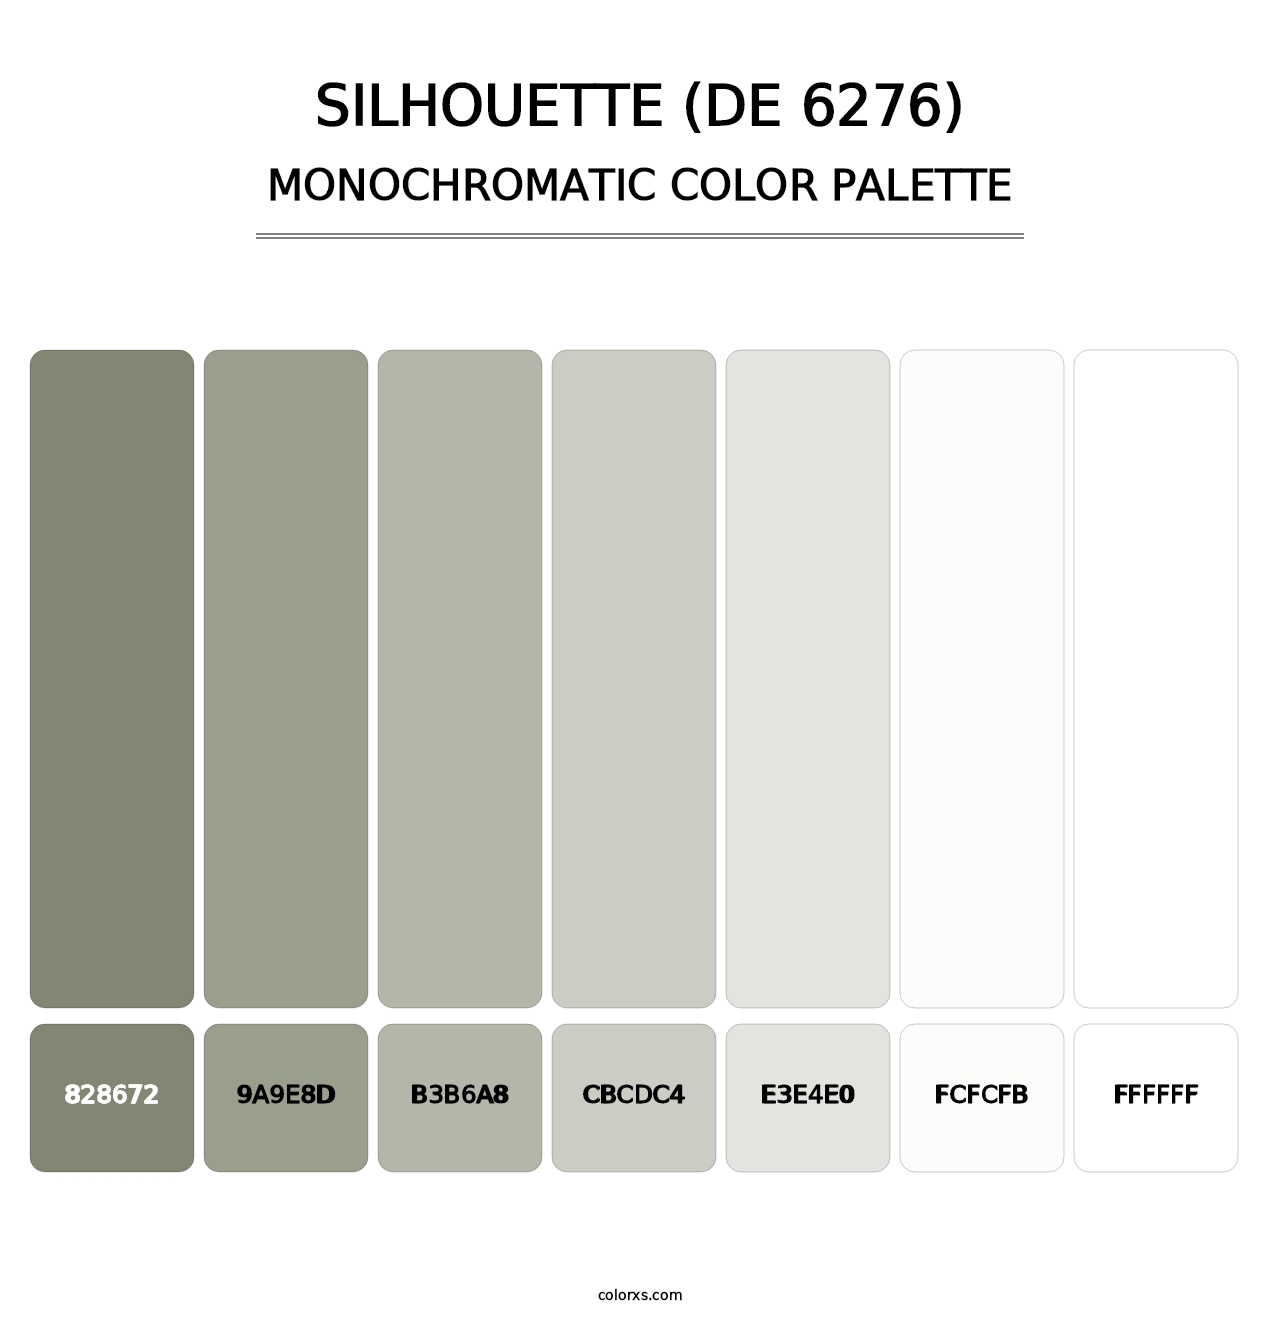 Silhouette (DE 6276) - Monochromatic Color Palette